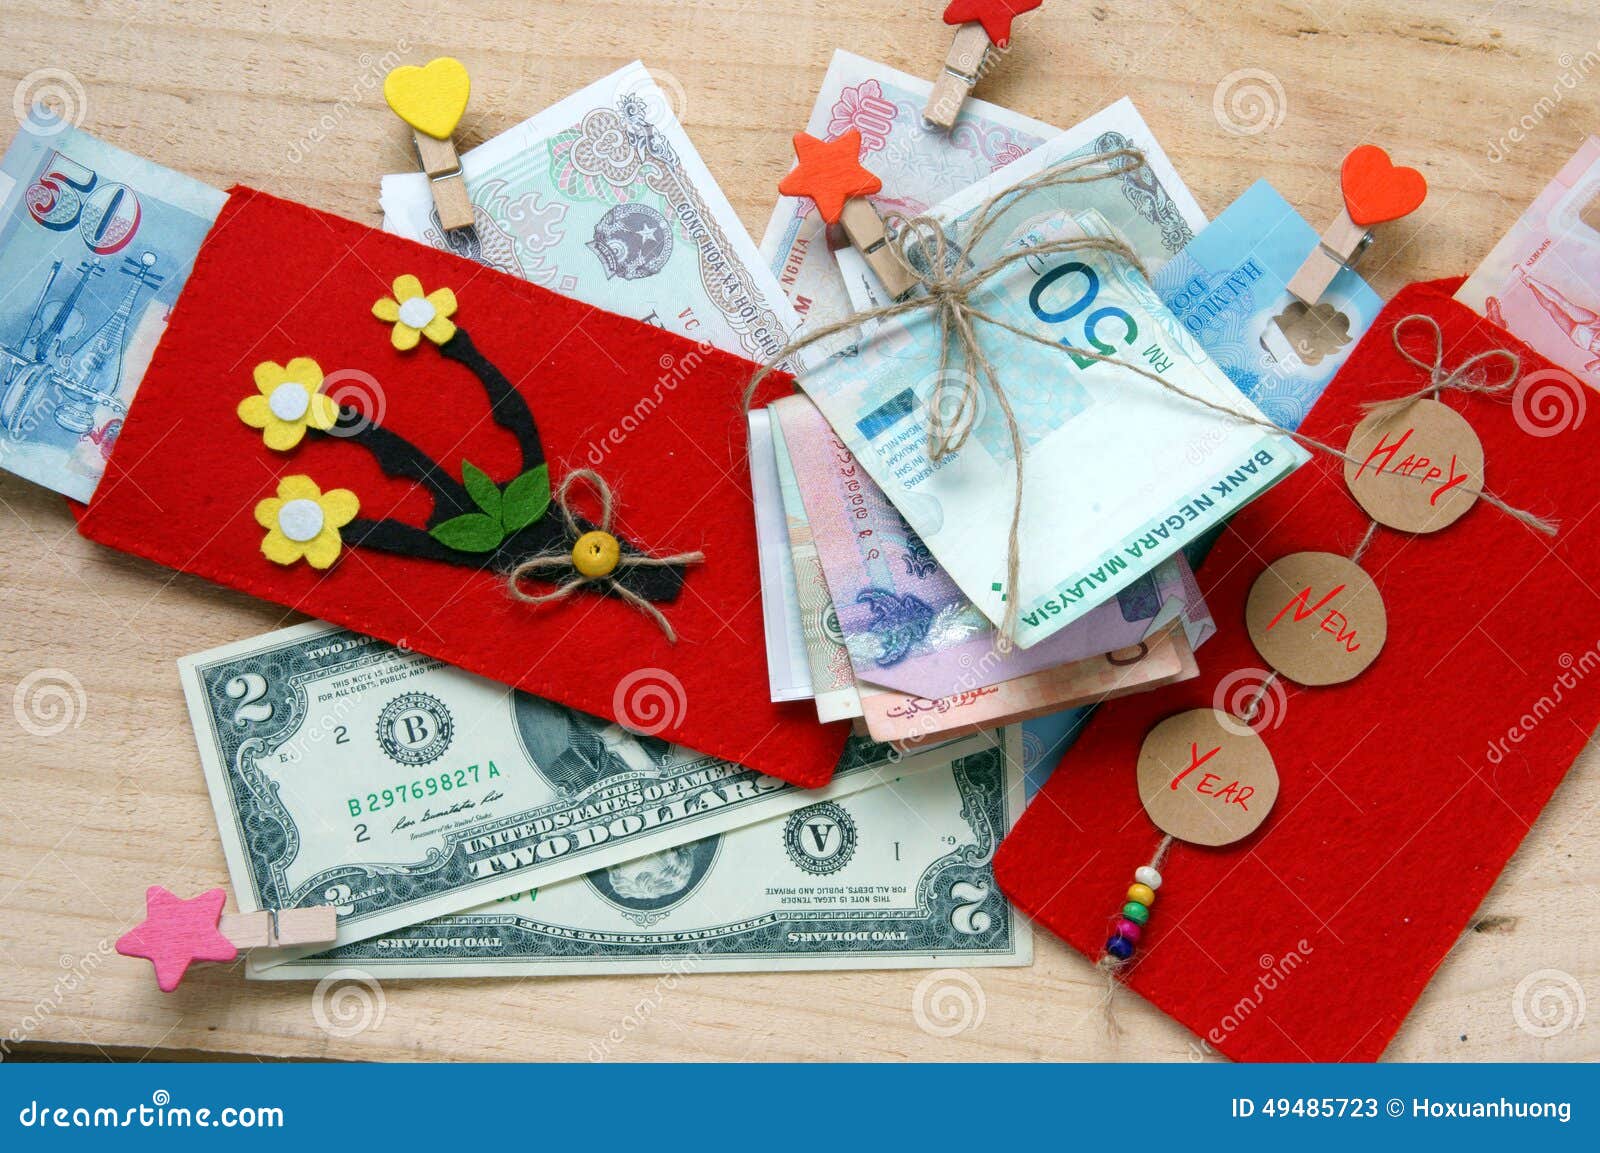 Vietnam Tet, Red Envelope, Lucky Money Stock Image - Image of custom,  happy: 49485723